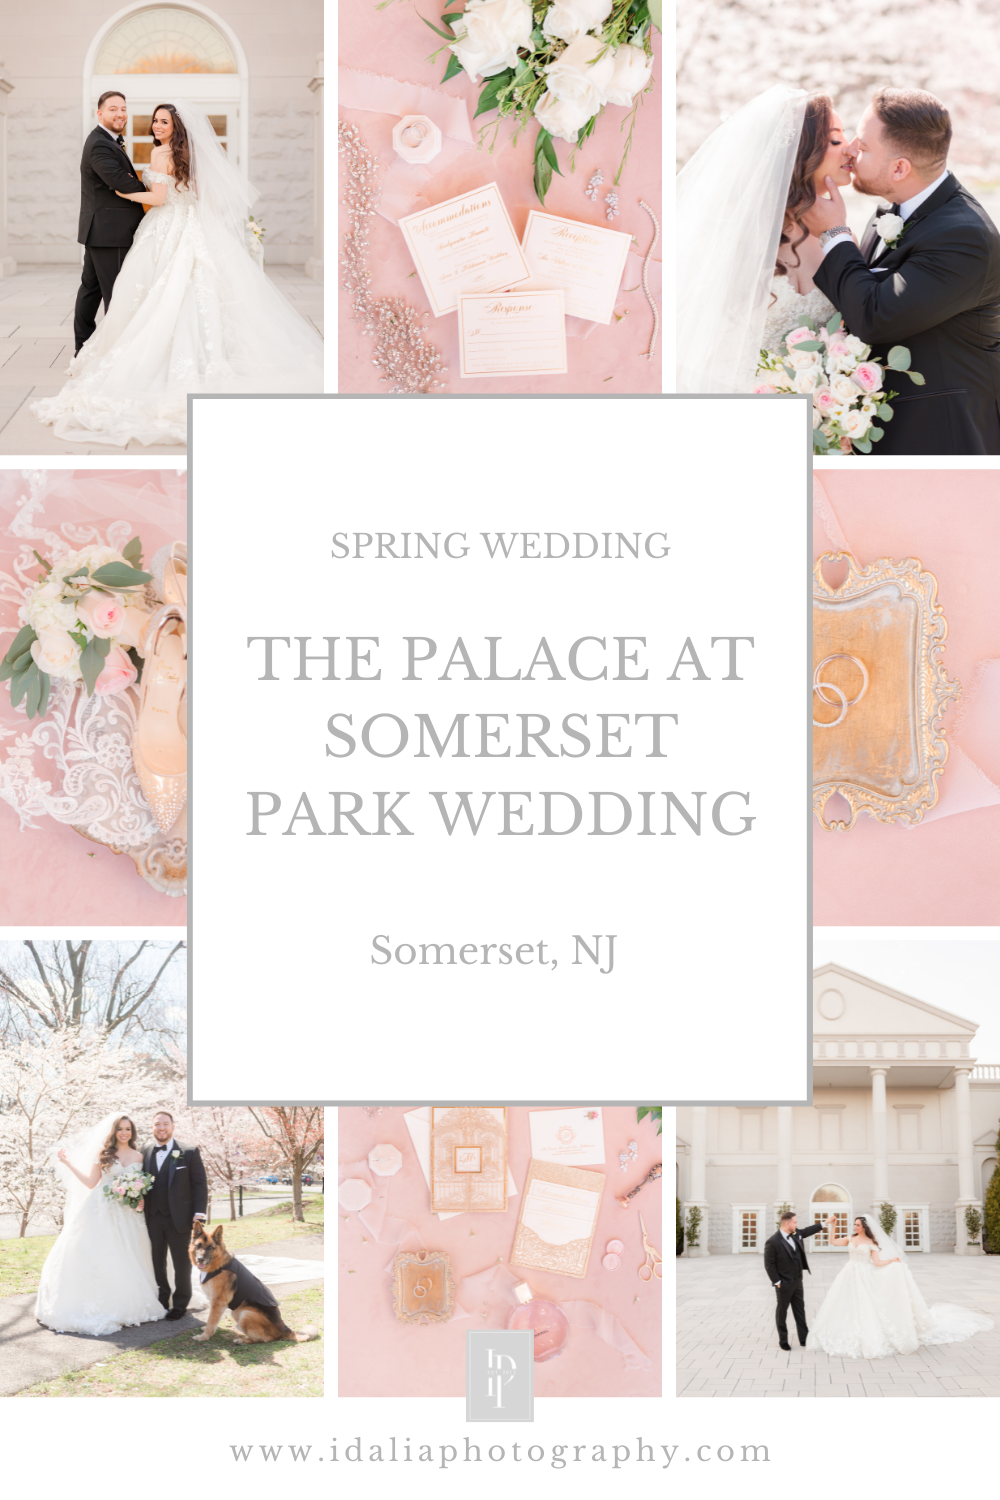 Elegant spring wedding at The Palace at Somerset Park during cherry blossom season